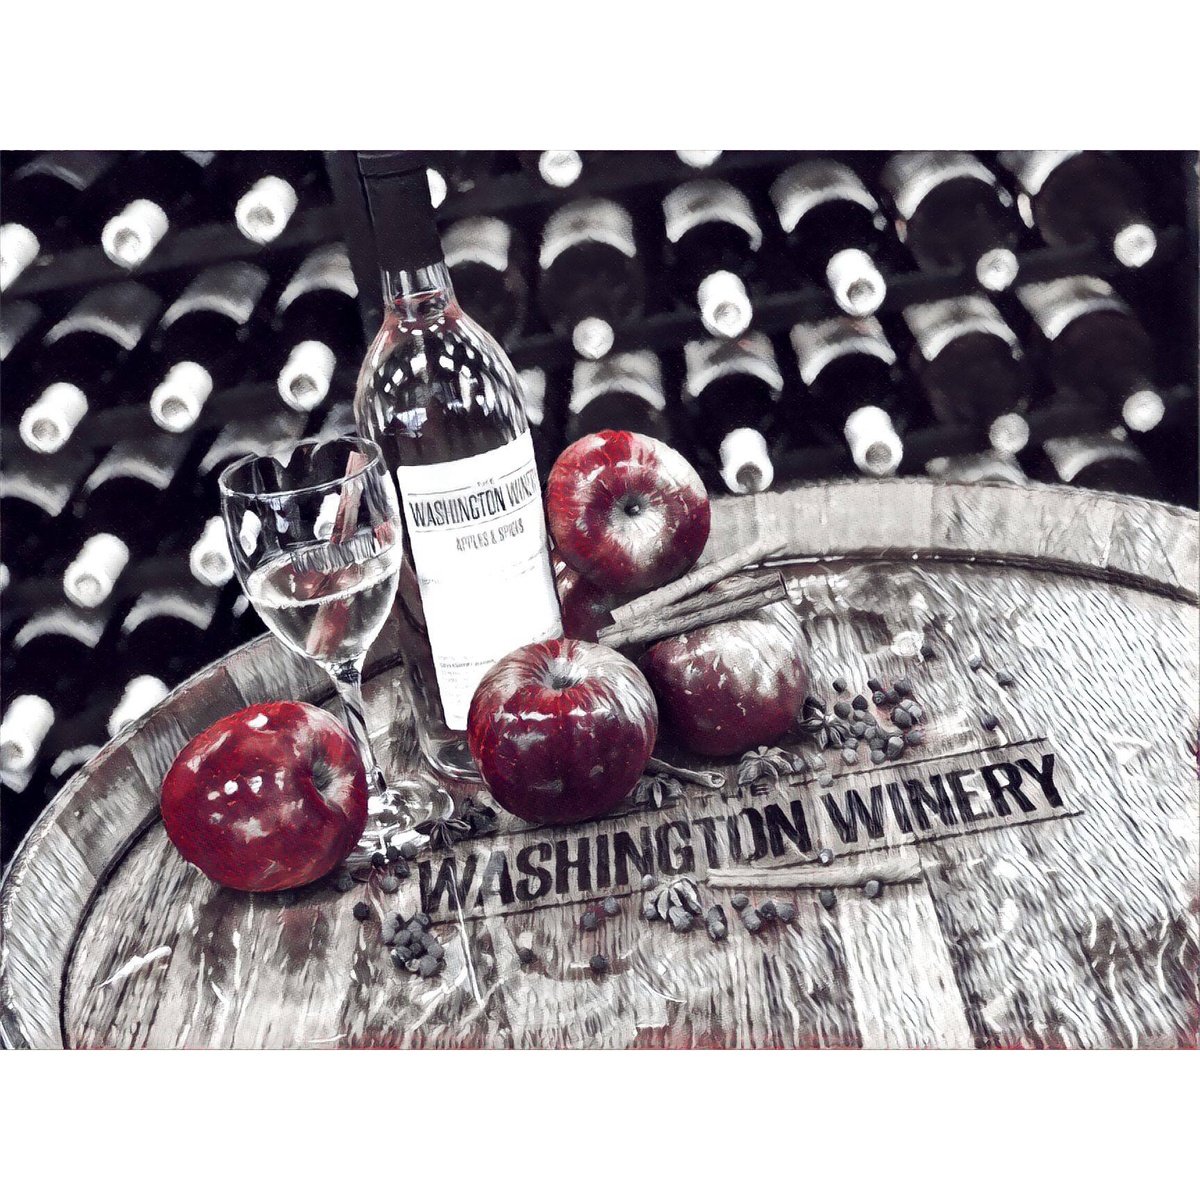 Washington Winery - Apples & Spices - 750mL Bottle